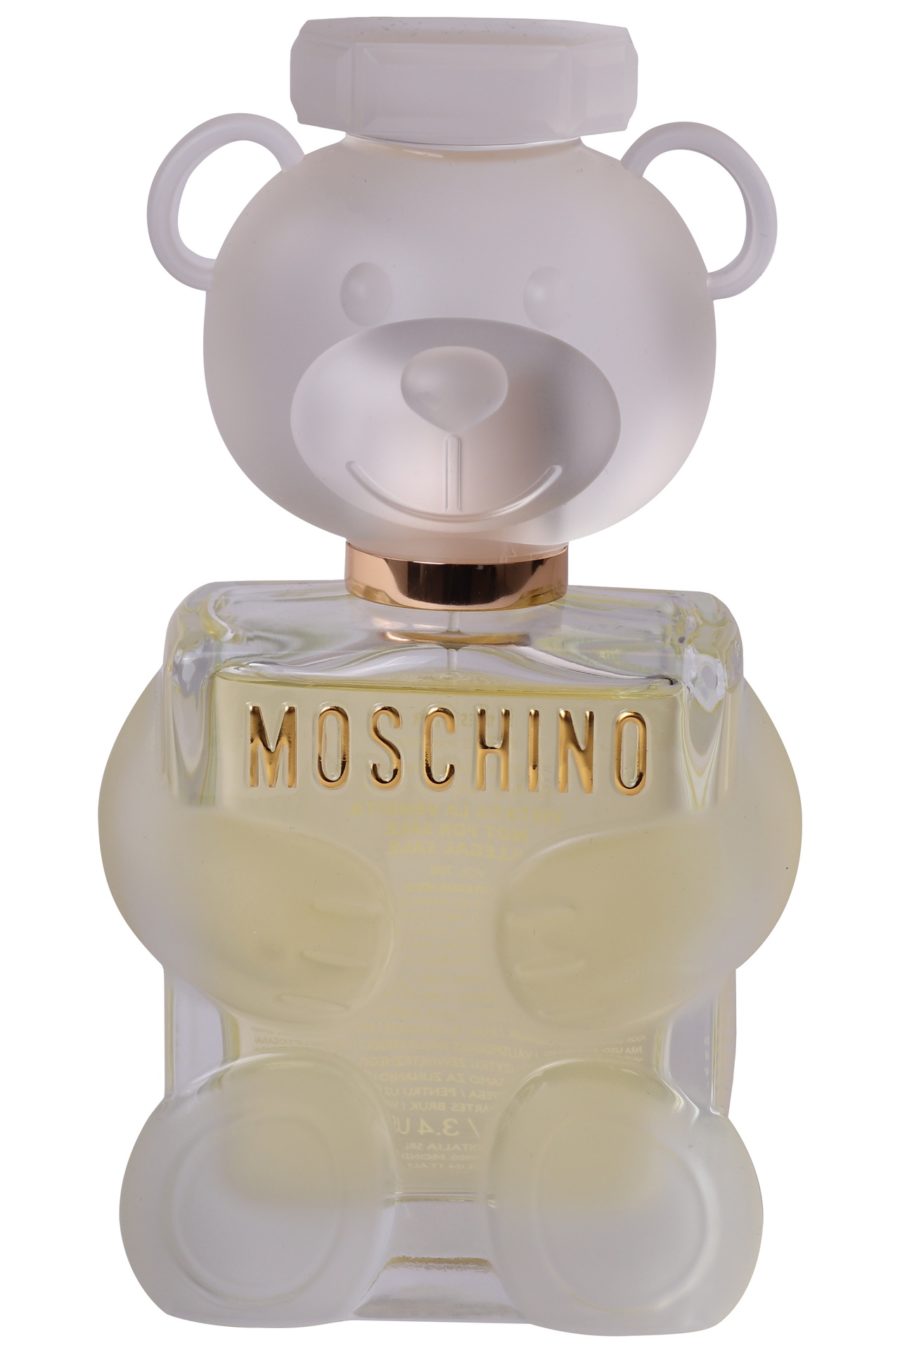 Parfum Moschino Toy 2 100 ml - 91447f5cd2759bbea764e065d9eb09aa21cf41a8